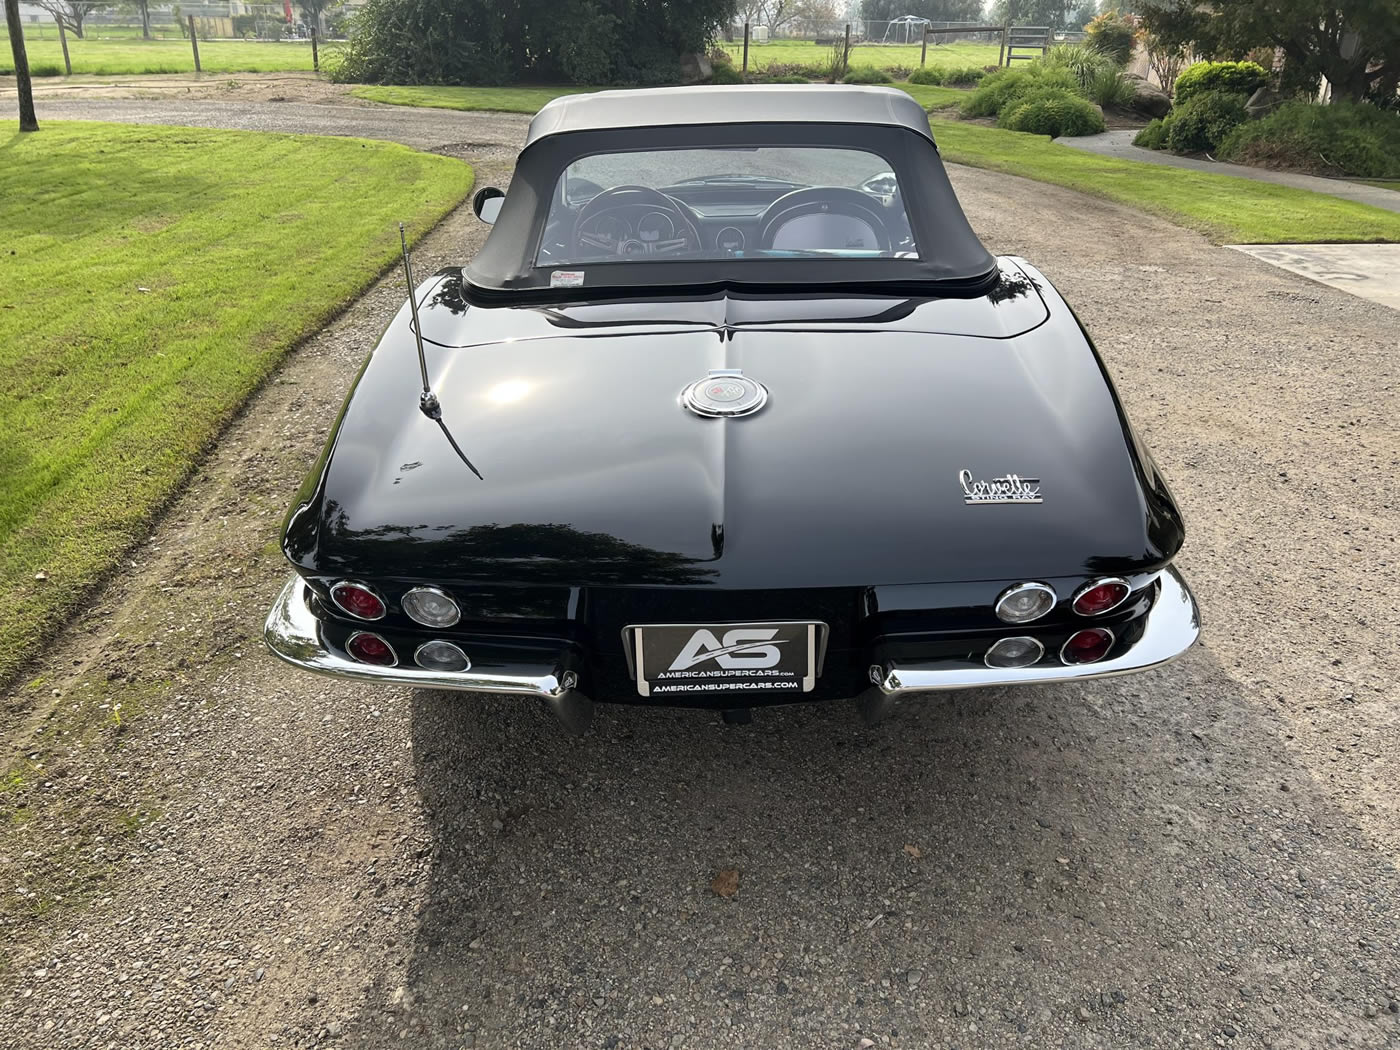 1966 Corvette Convertible L72 427/425 4-Speed in Tuxedo Black